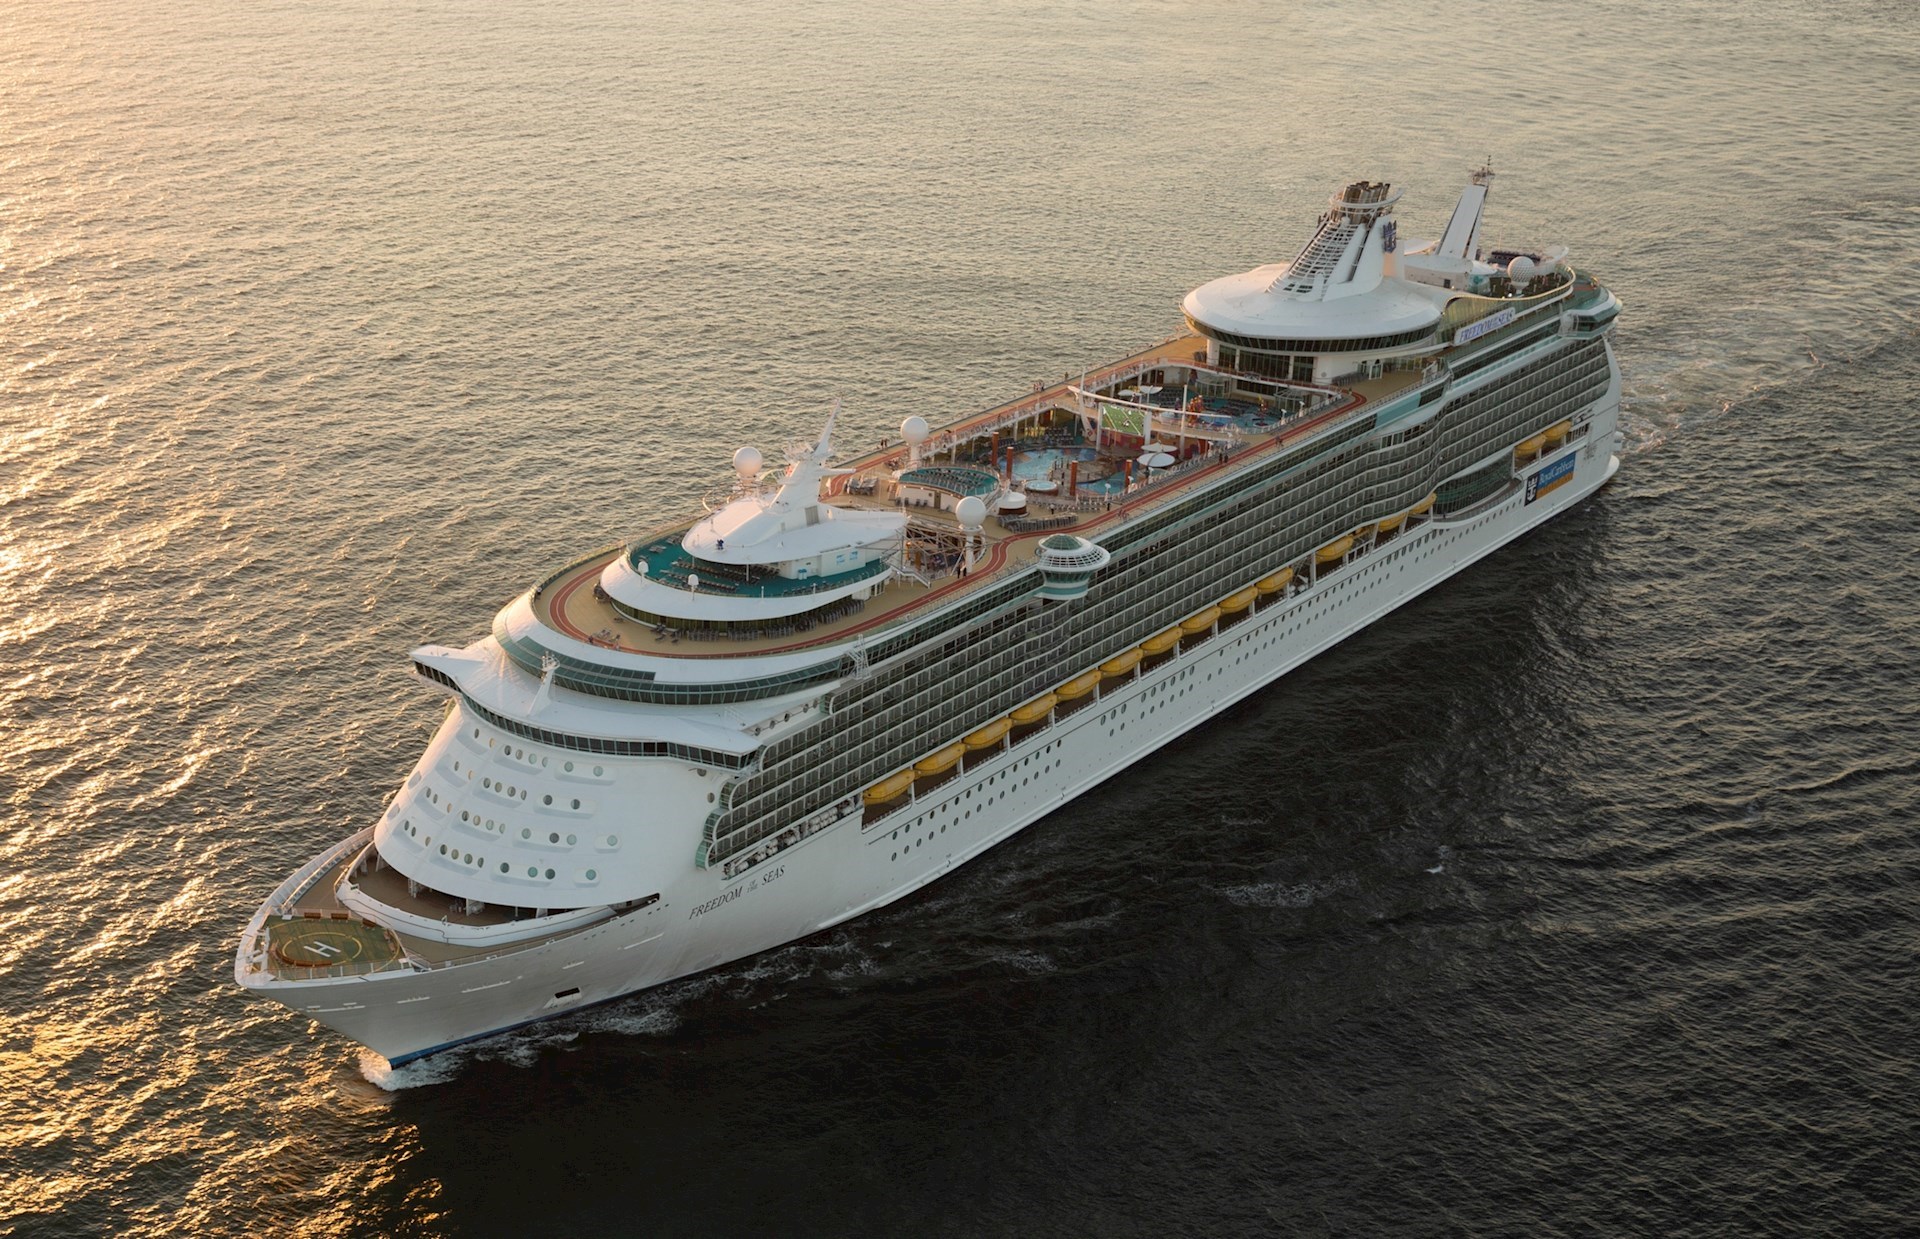 Royal Caribbean Freedom of the Seas Cruise Ship 2022 / 2023